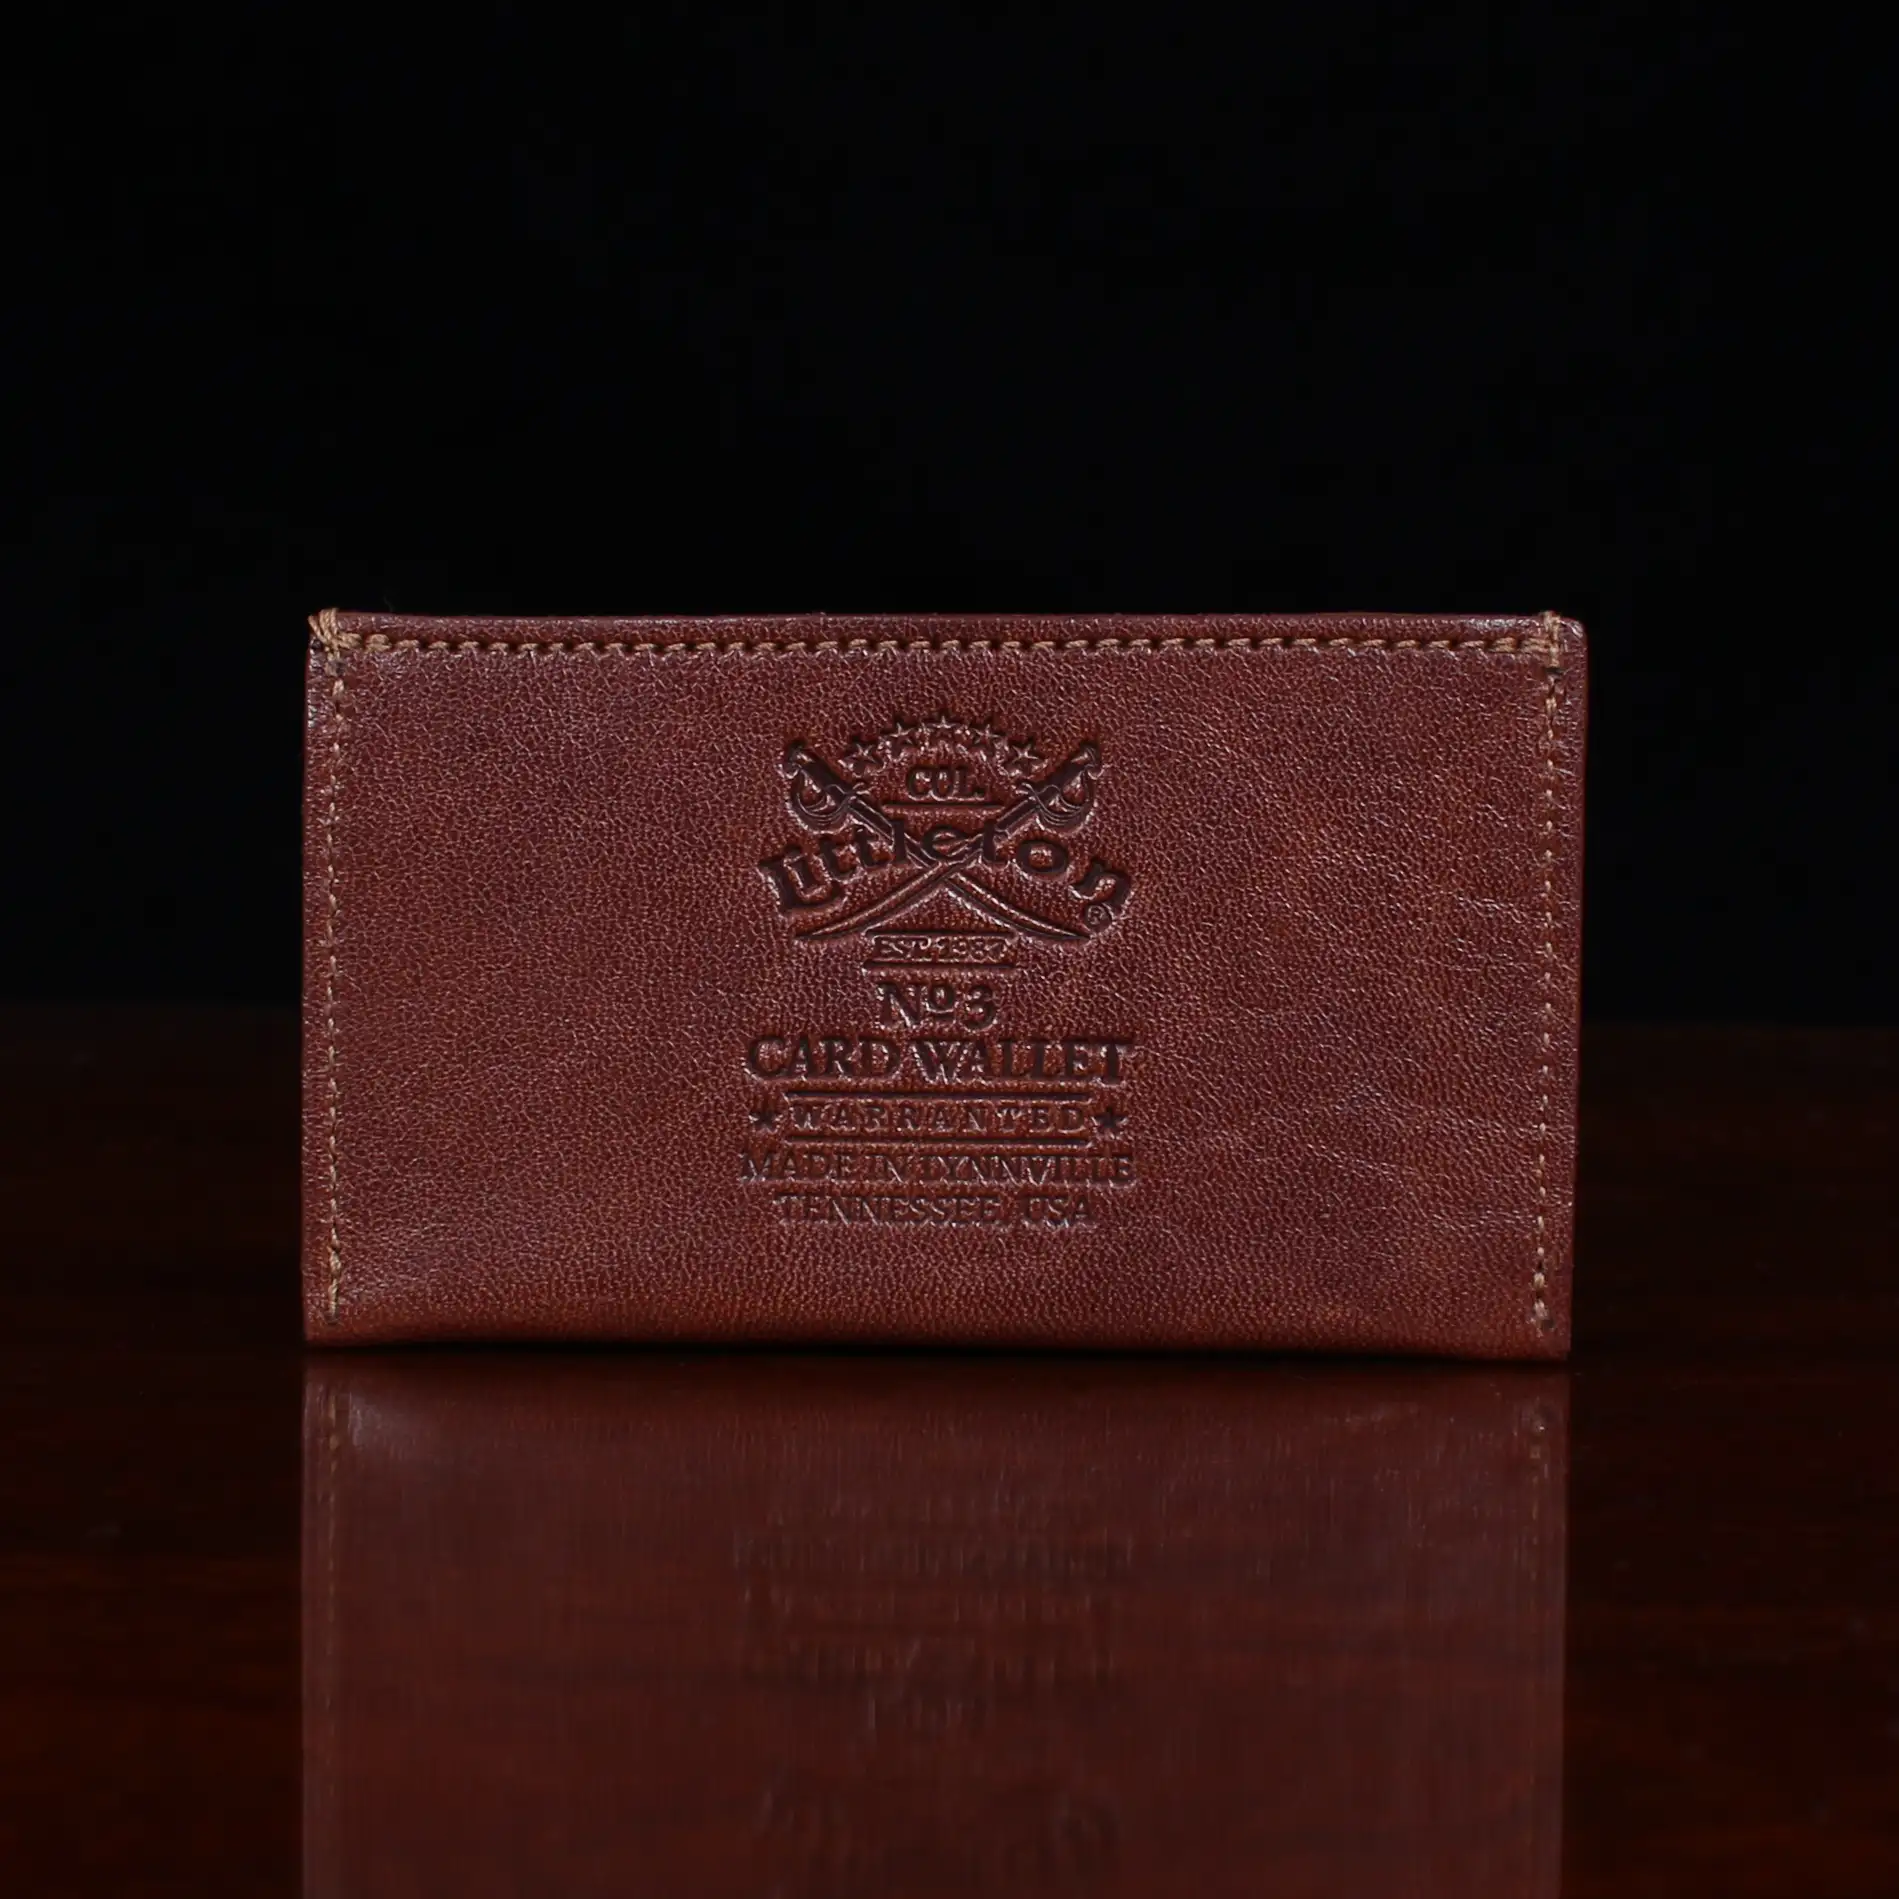 no 3 vintage brown leather card wallet with business card pocket back